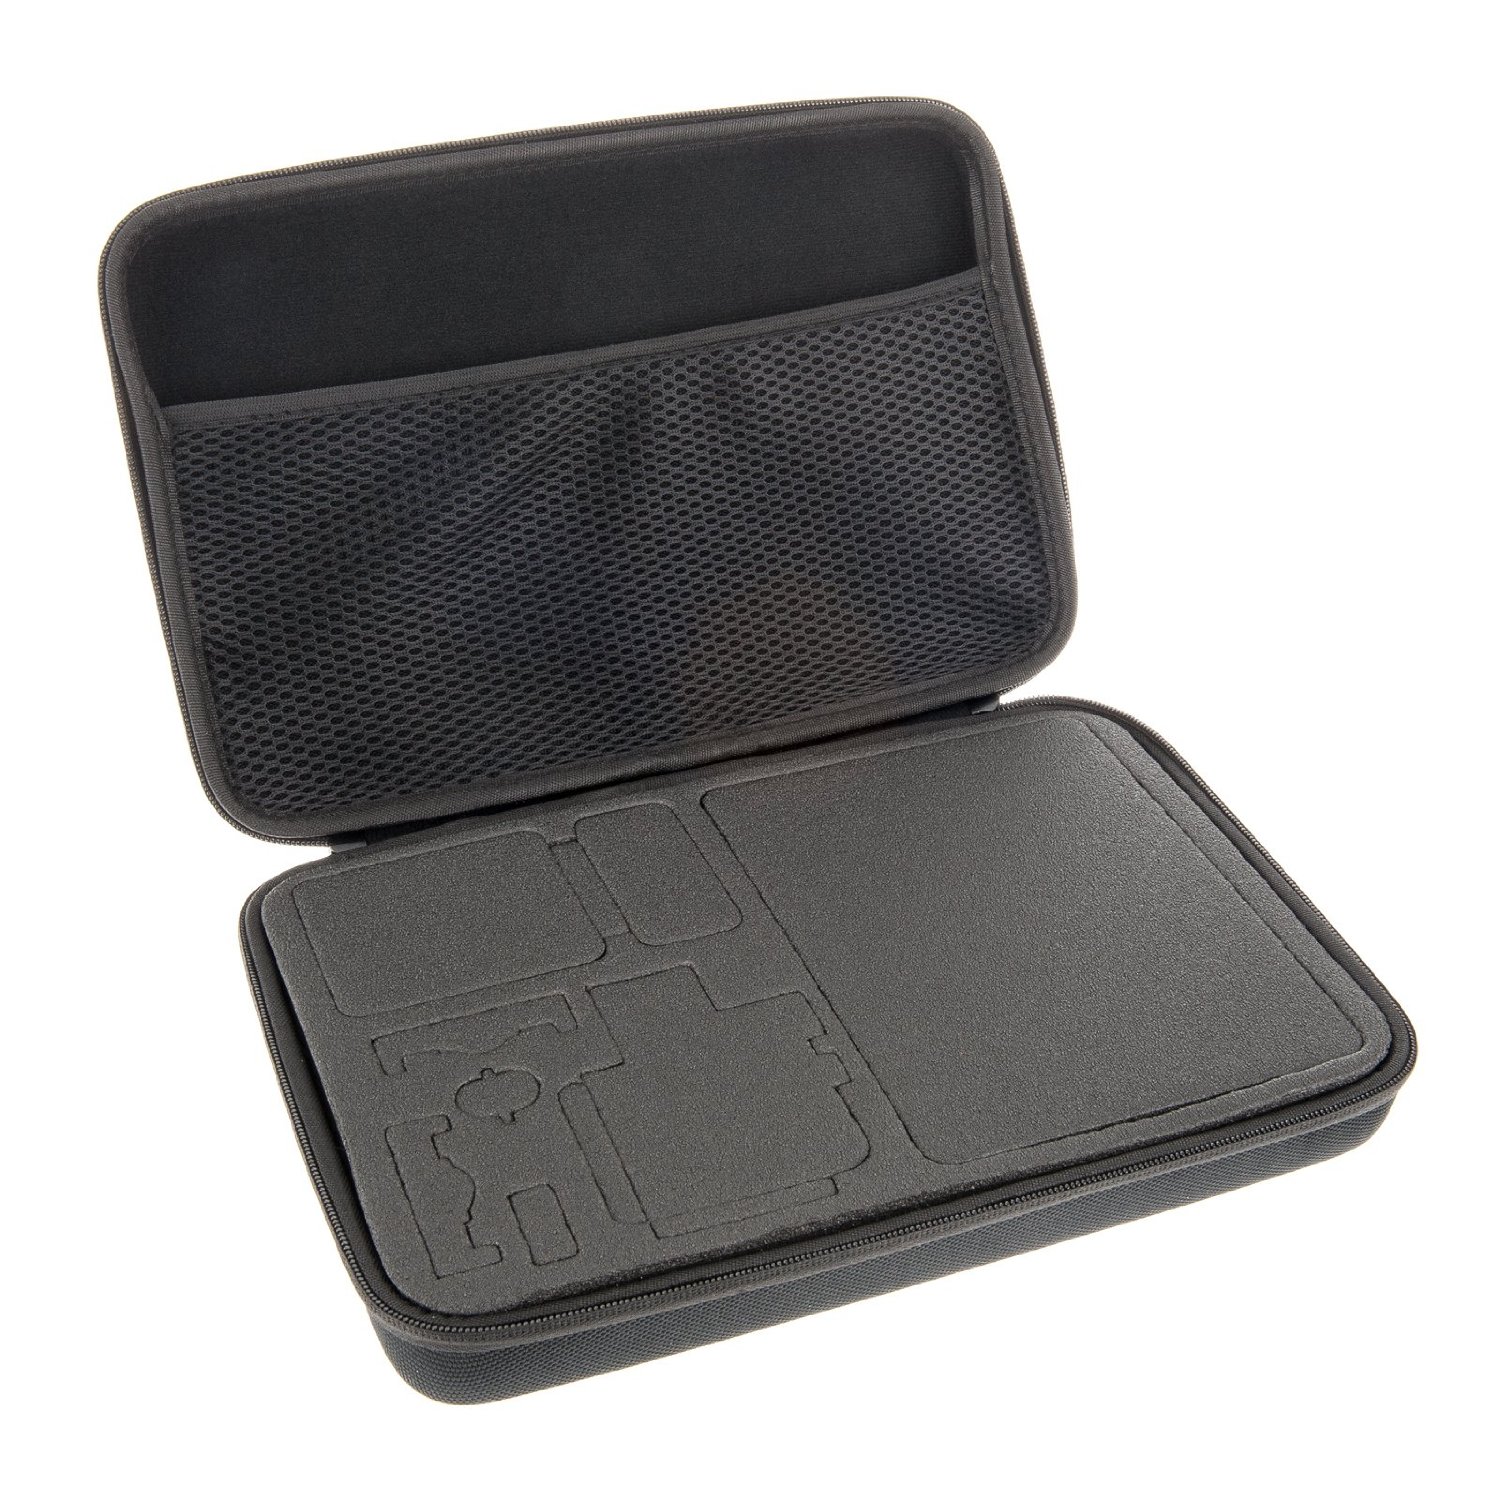 Caseflex GoPro Accessories Portable Protective Hard Case